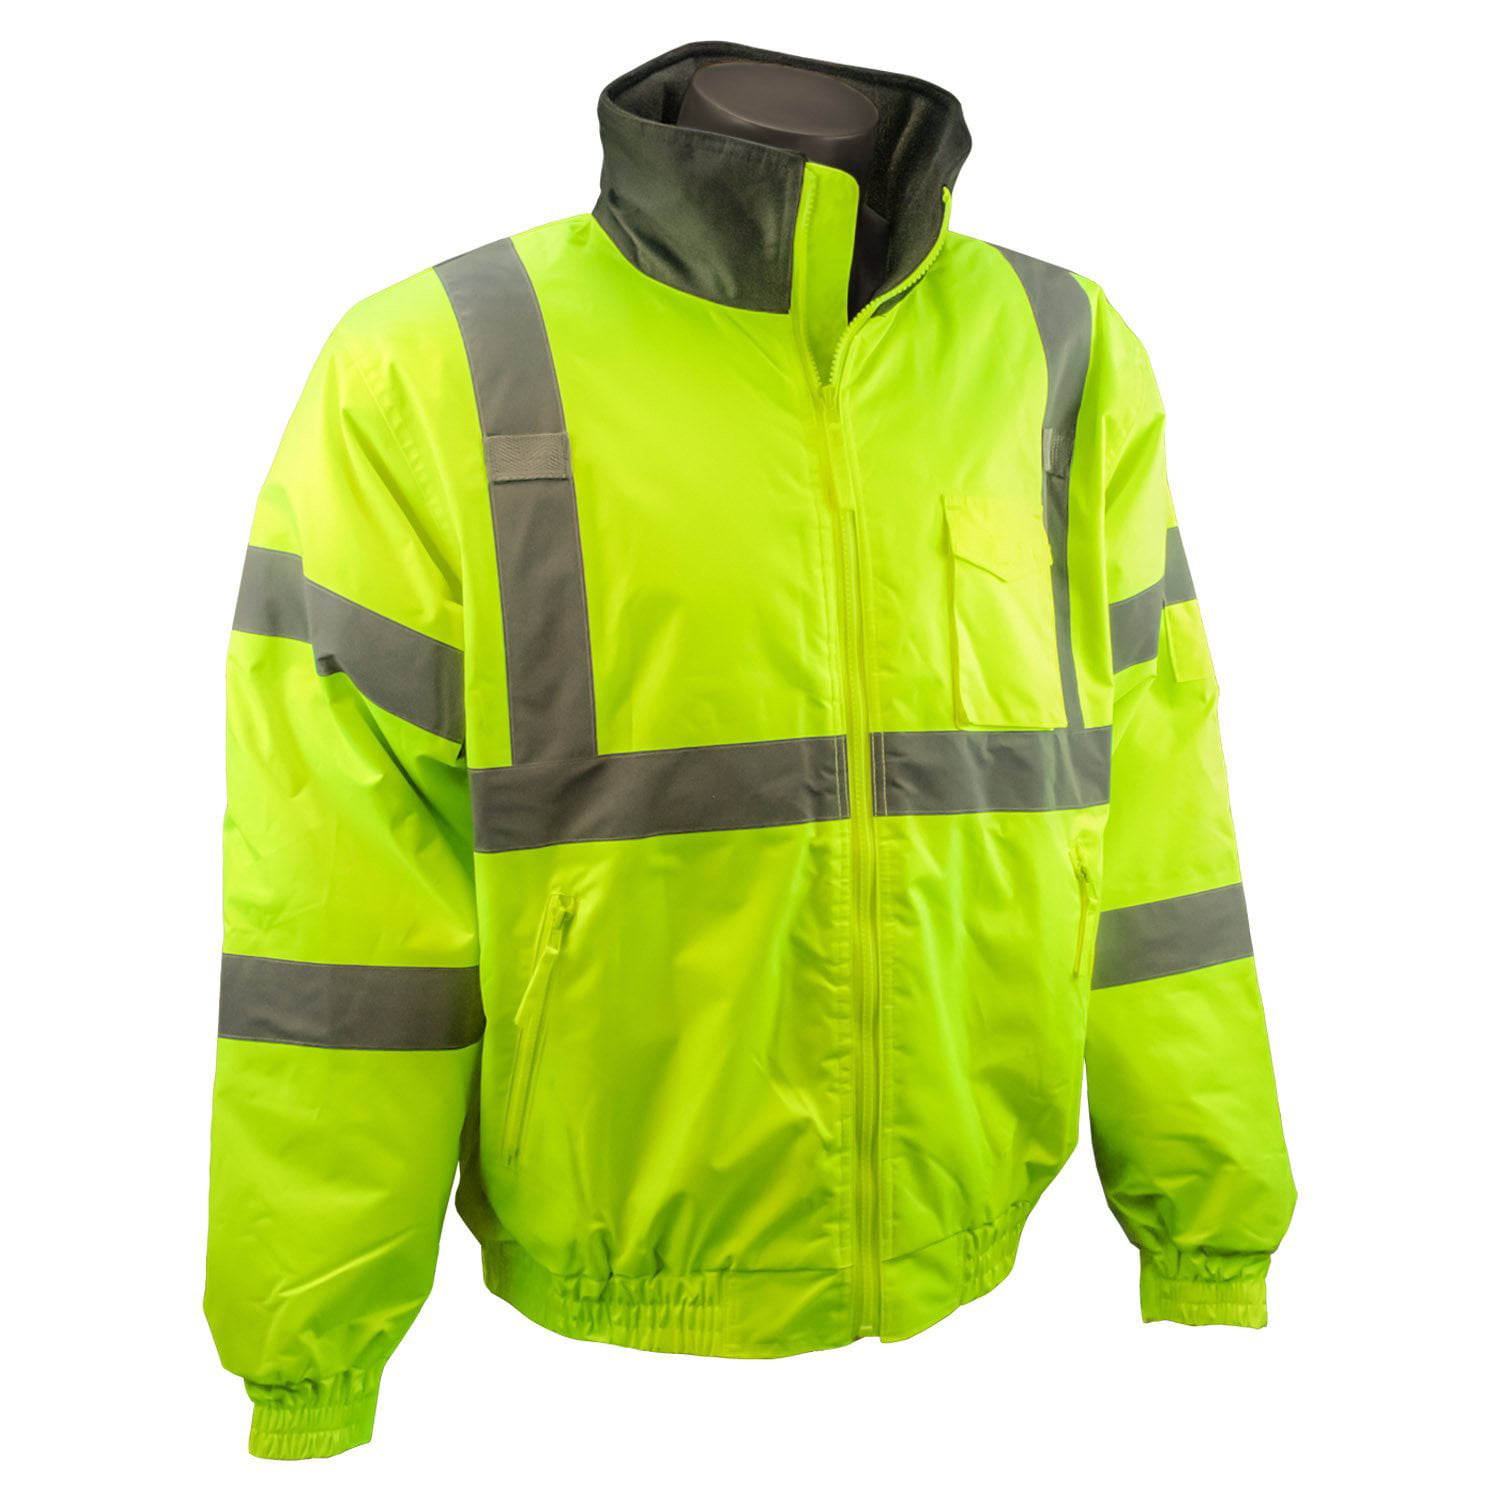 Бомбер лайм. Safety work Jacket. Orange Jacket Lime. Biosafety куртка.